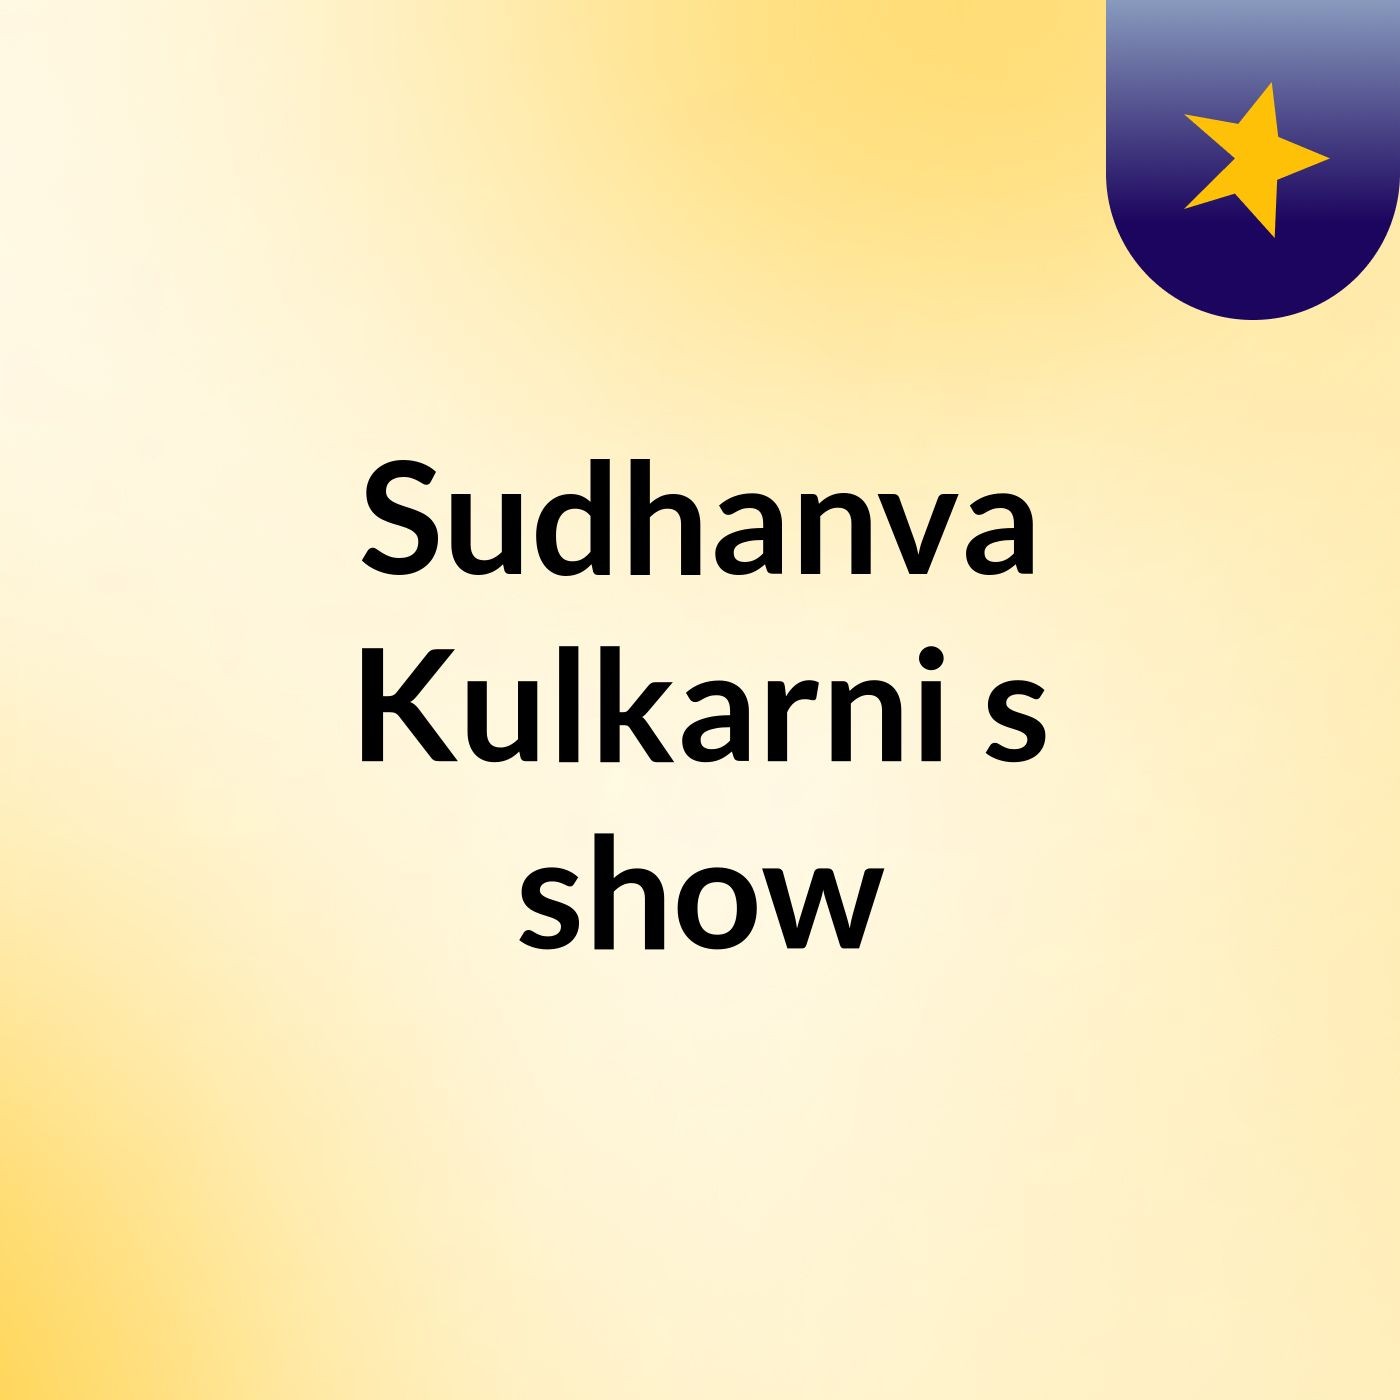 Sudhanva Kulkarni's show